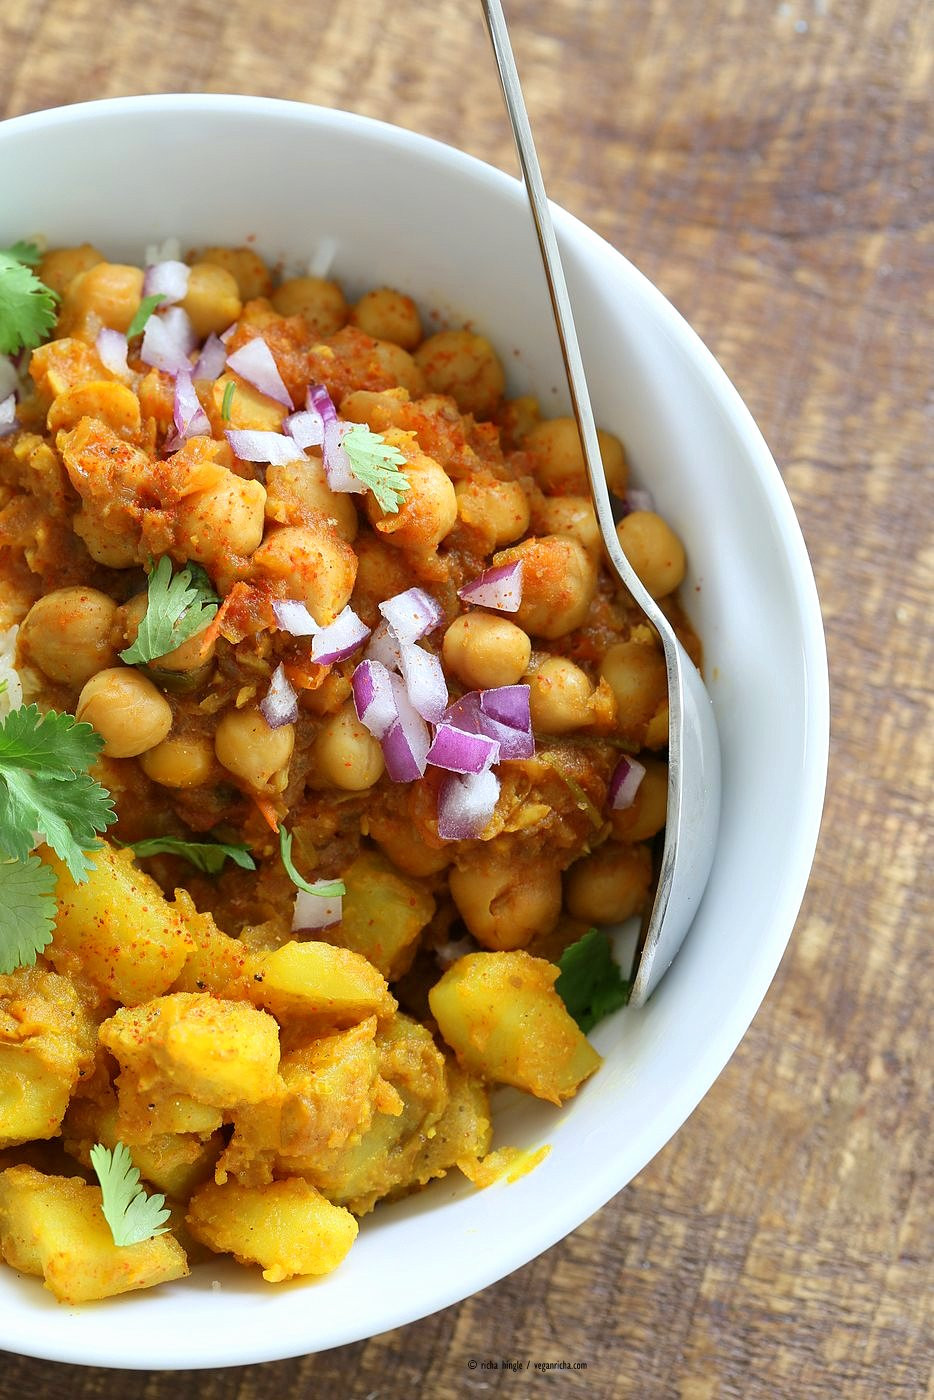 Vegan Chickpea Recipes
 Easy Chickpea Curry and Spiced Potato Bowl Vegan Richa